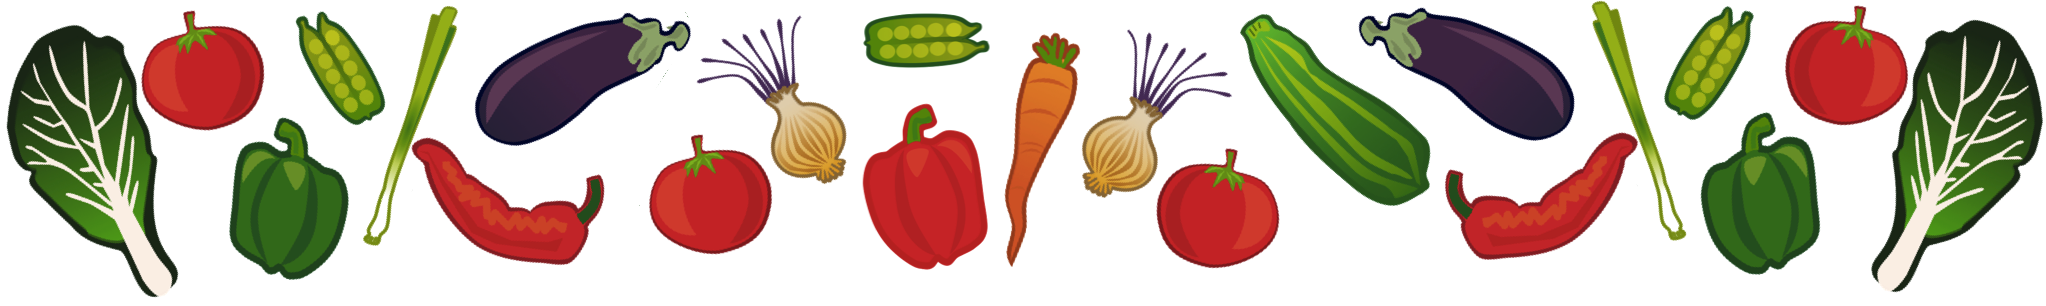 clipart banner vegetable